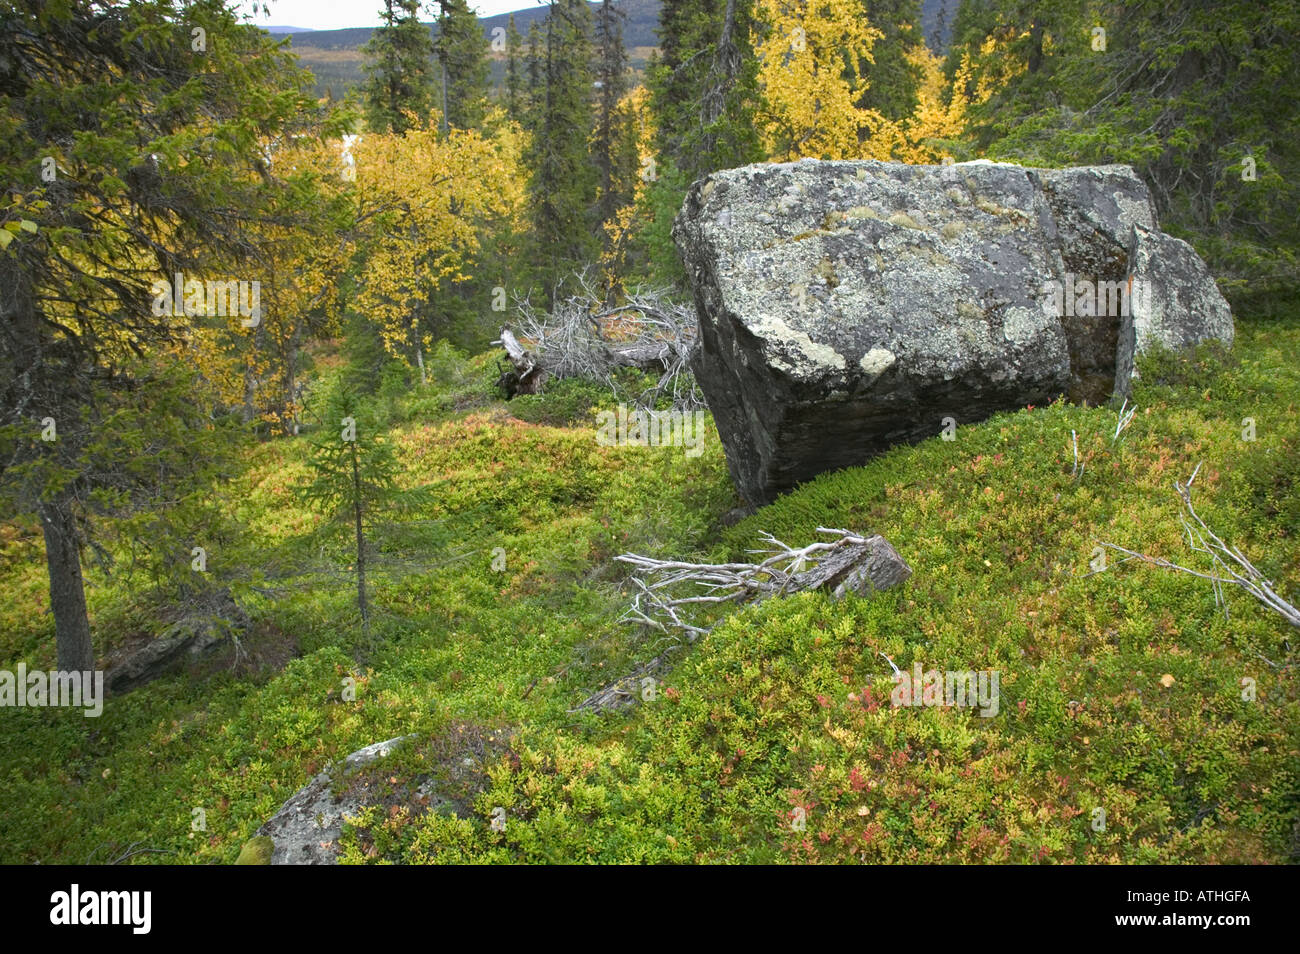 A boulder in the middle of old growth forest Mt Nammasj Kvikkjokk Lapland Sweden Stock Photo